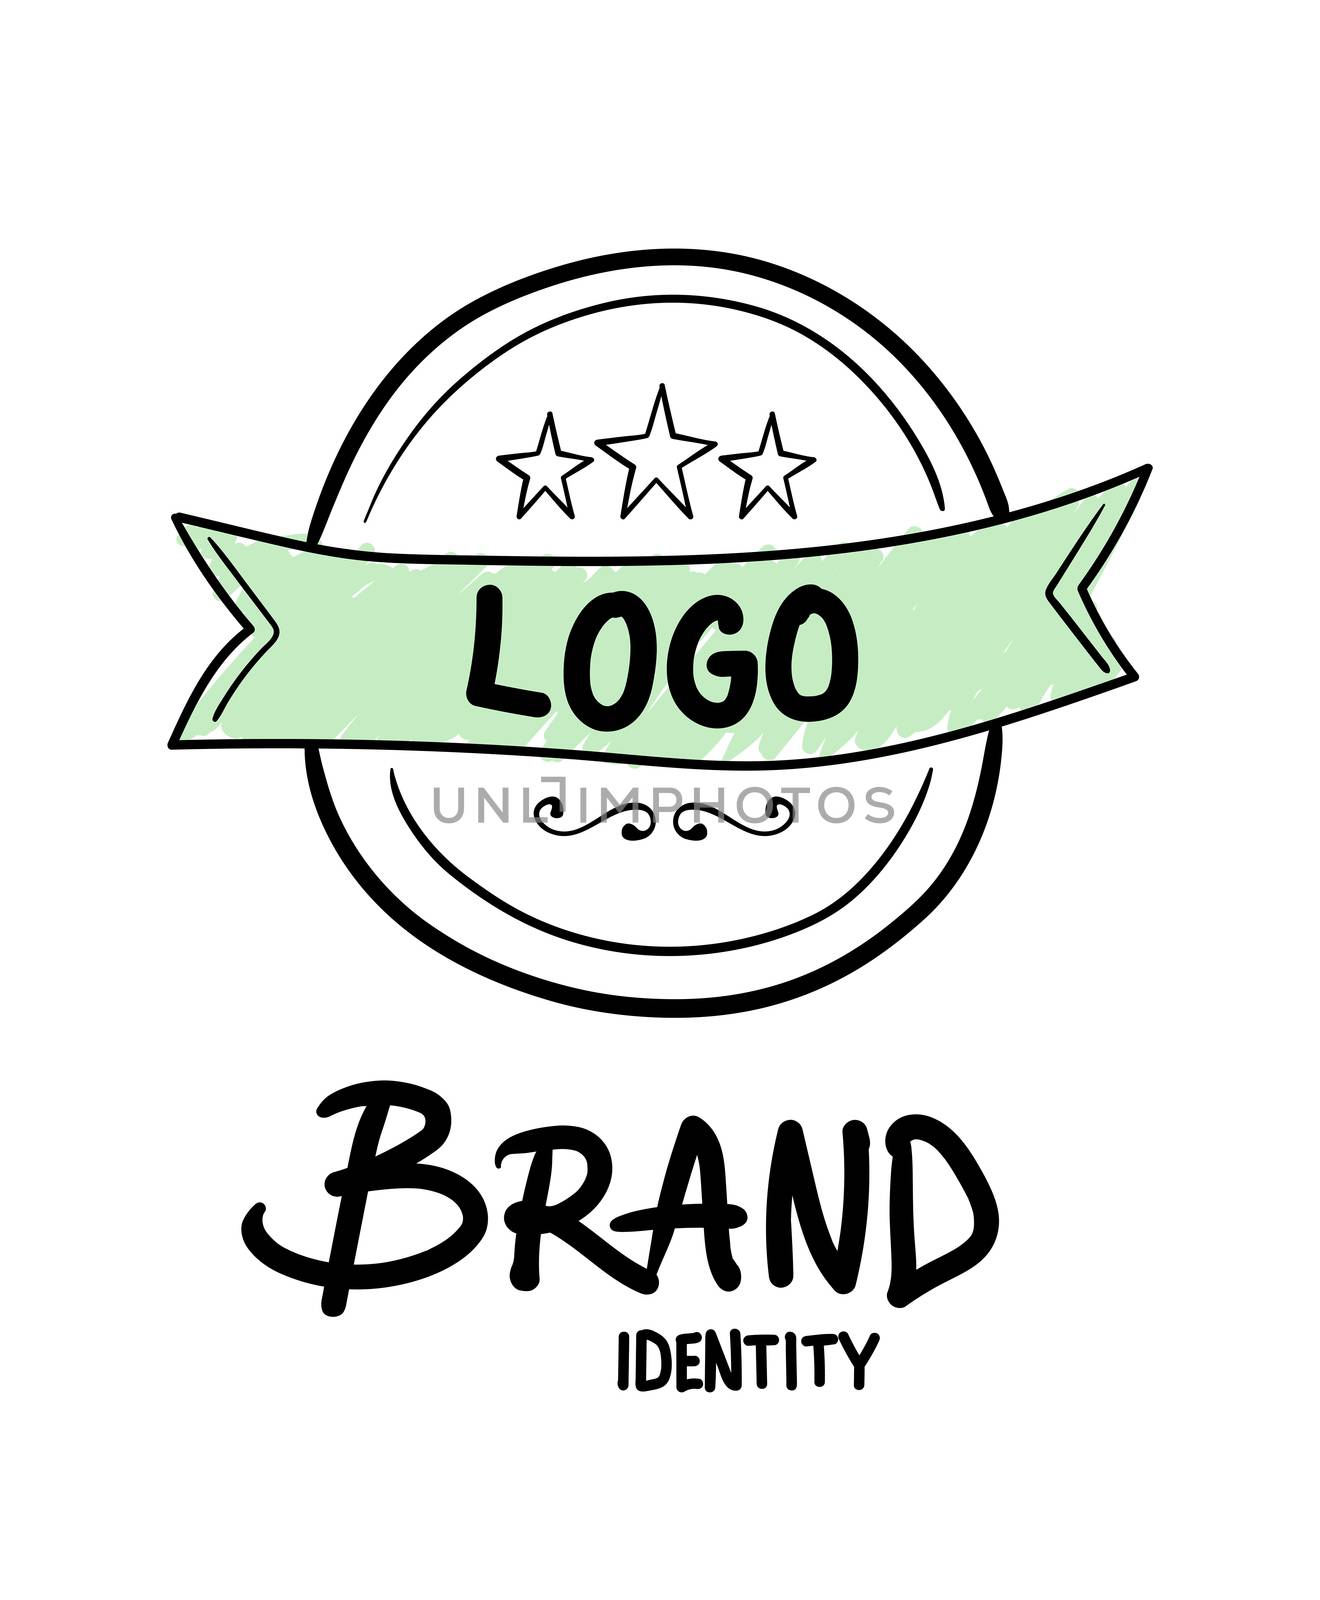 Brand identity concept vector by Wavebreakmedia